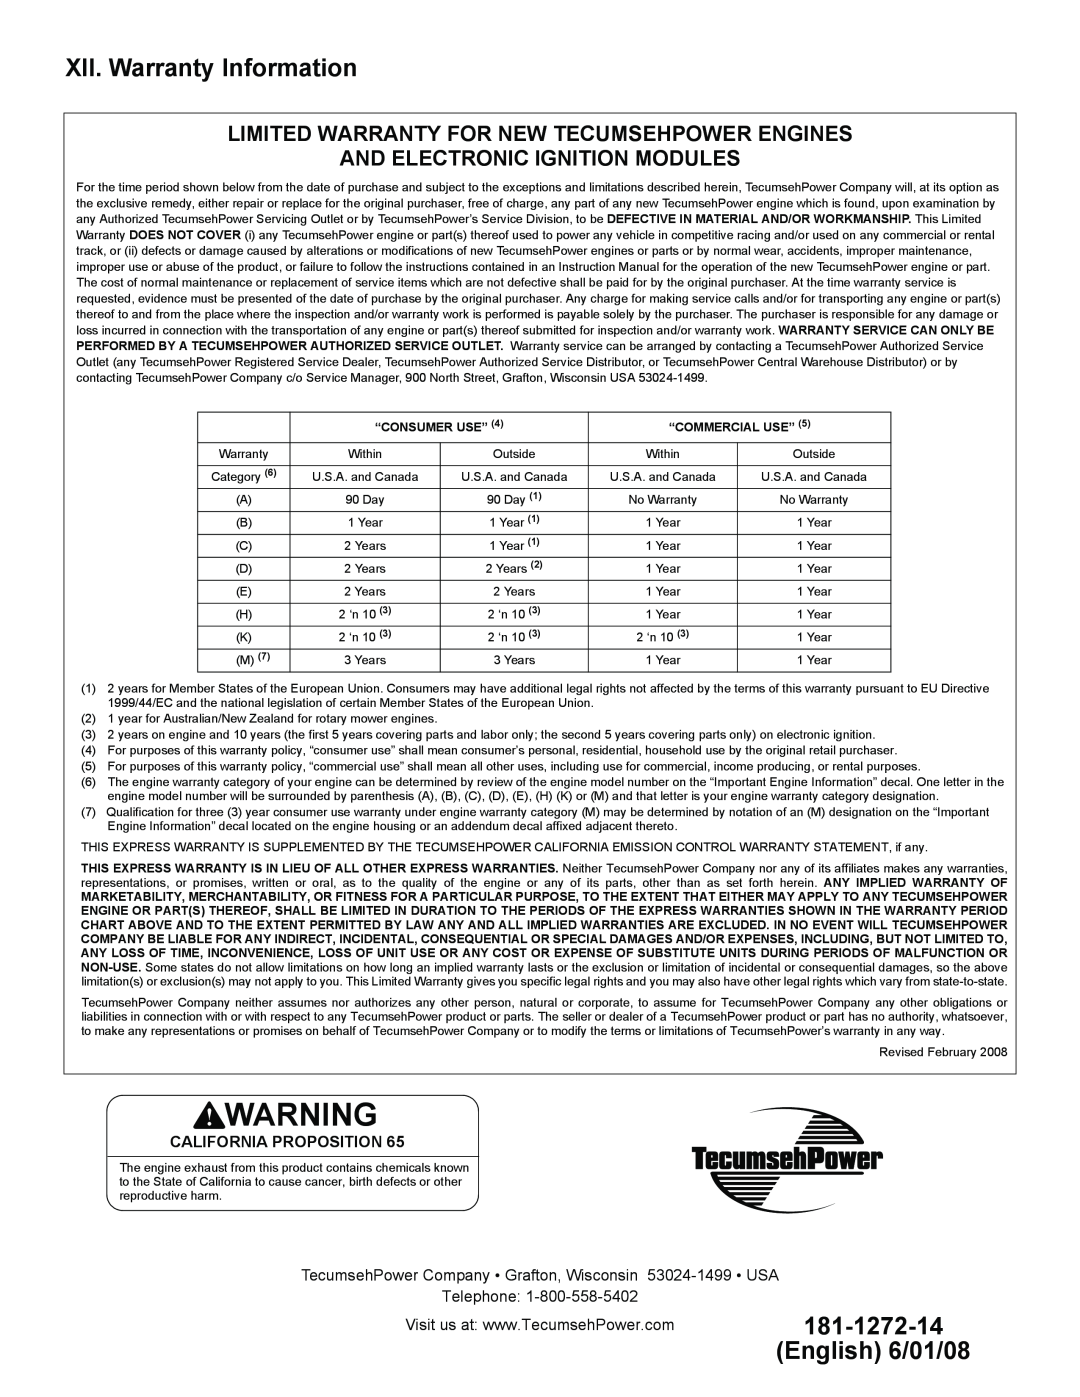 Tecumseh OV195XA XII. Warranty Information, Limited Warranty For New Tecumsehpower Engines, English 6/01/08, Telephone 